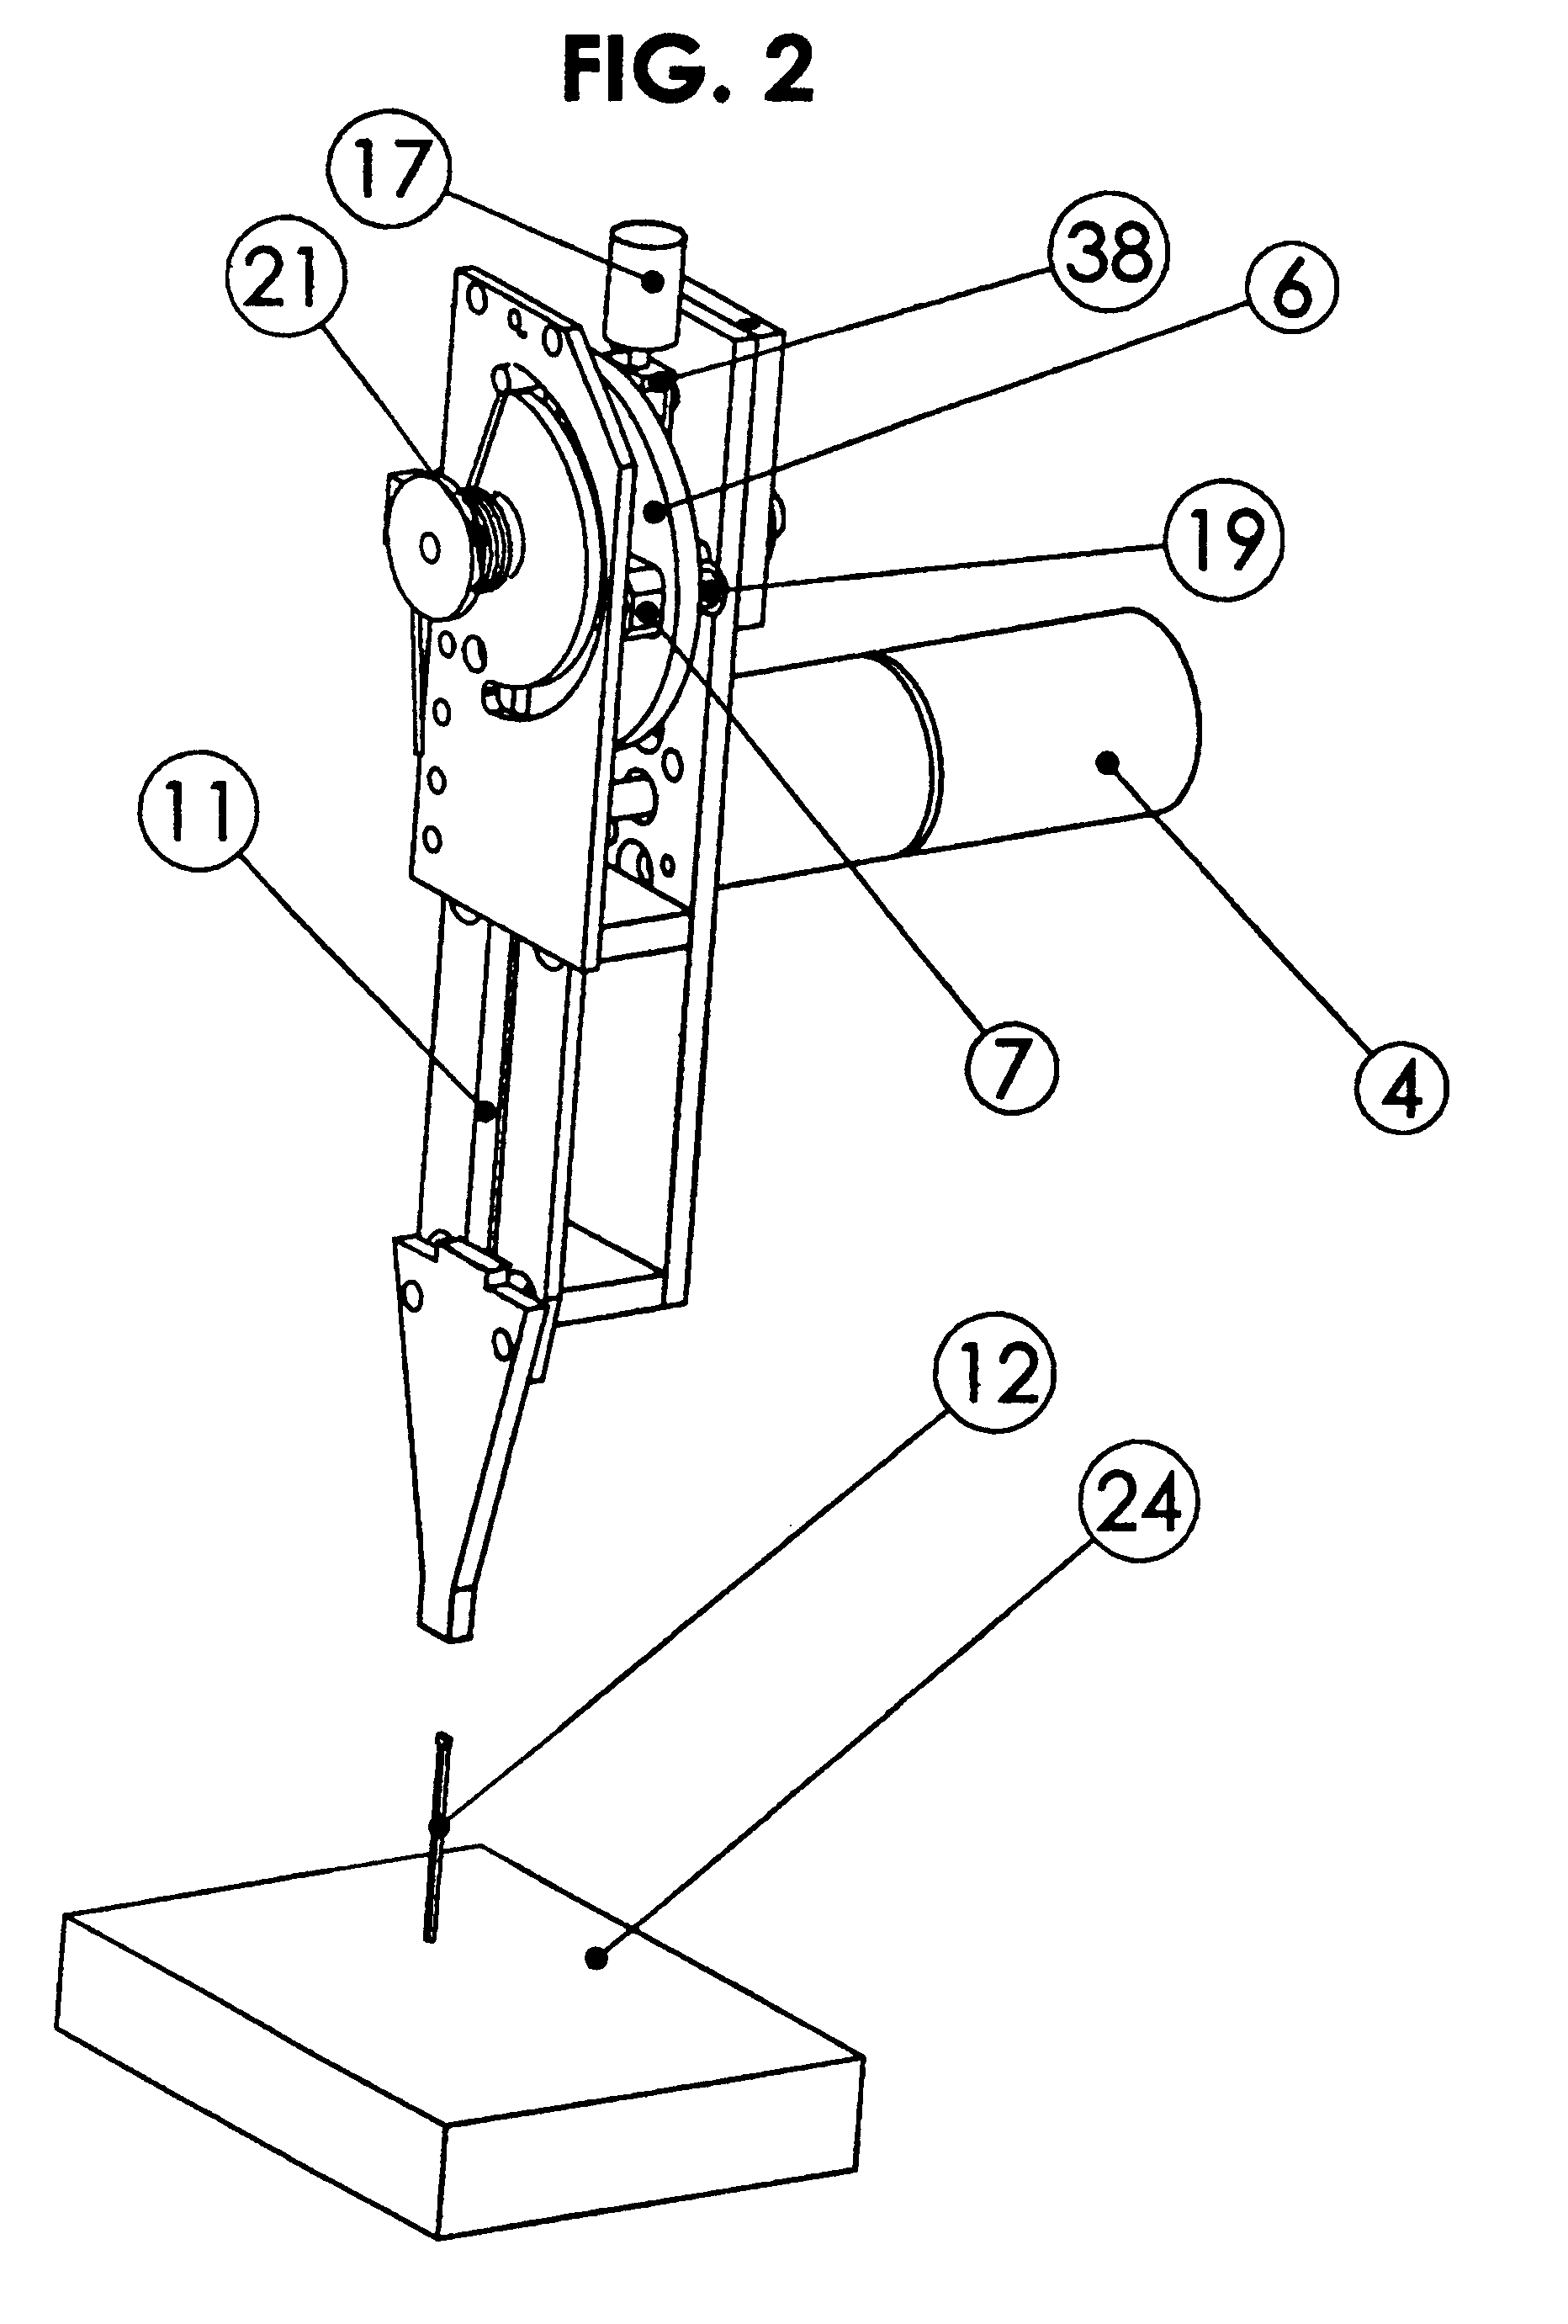 Electrical motor driven nail gun